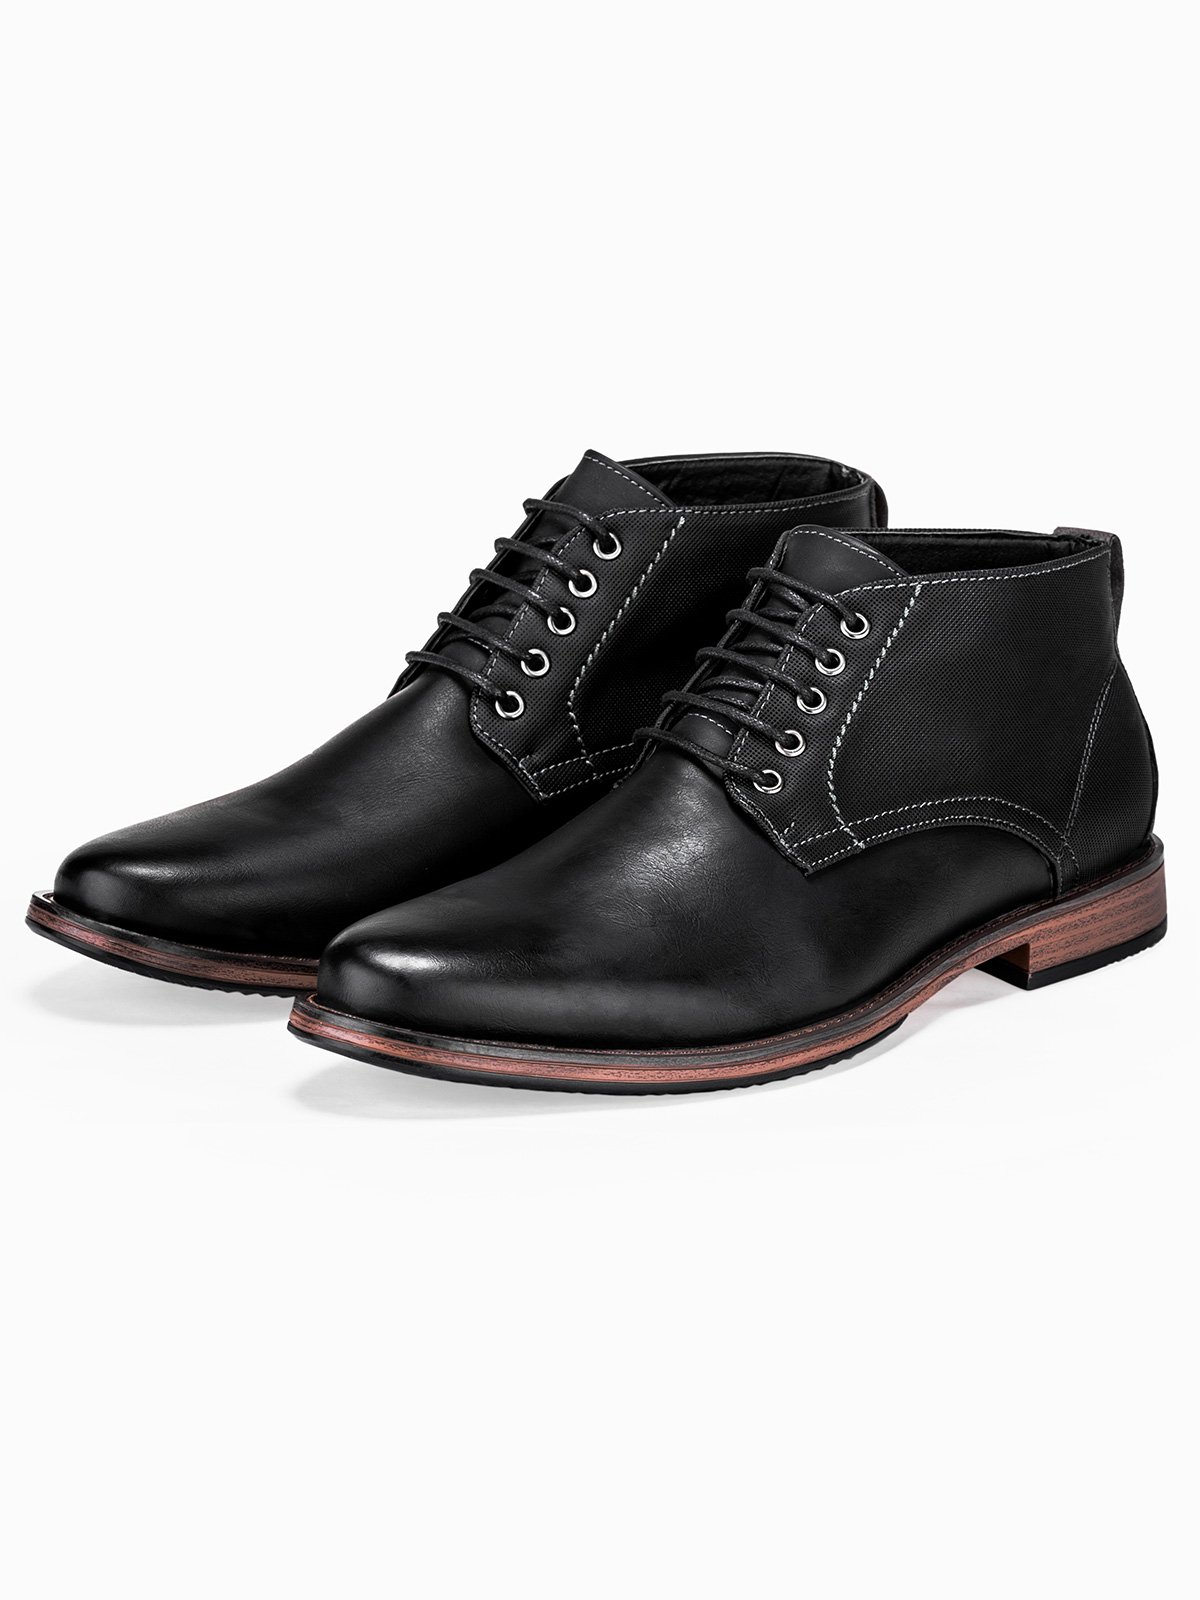 Men's casual lace-ups T262 - black | MODONE wholesale - Clothing For Men